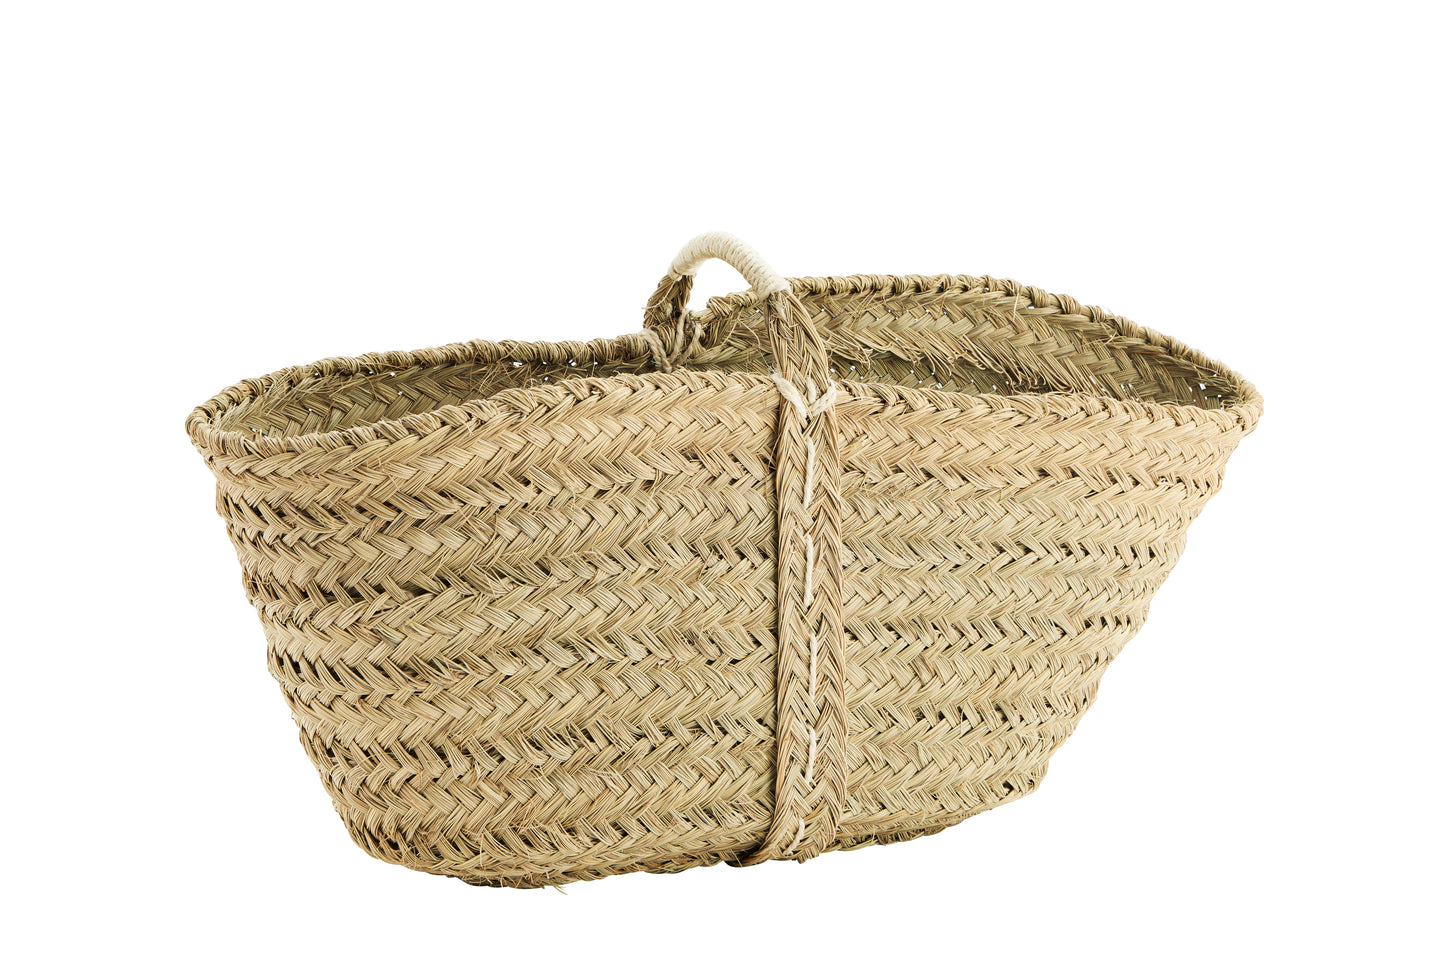 The Large Danish Basket